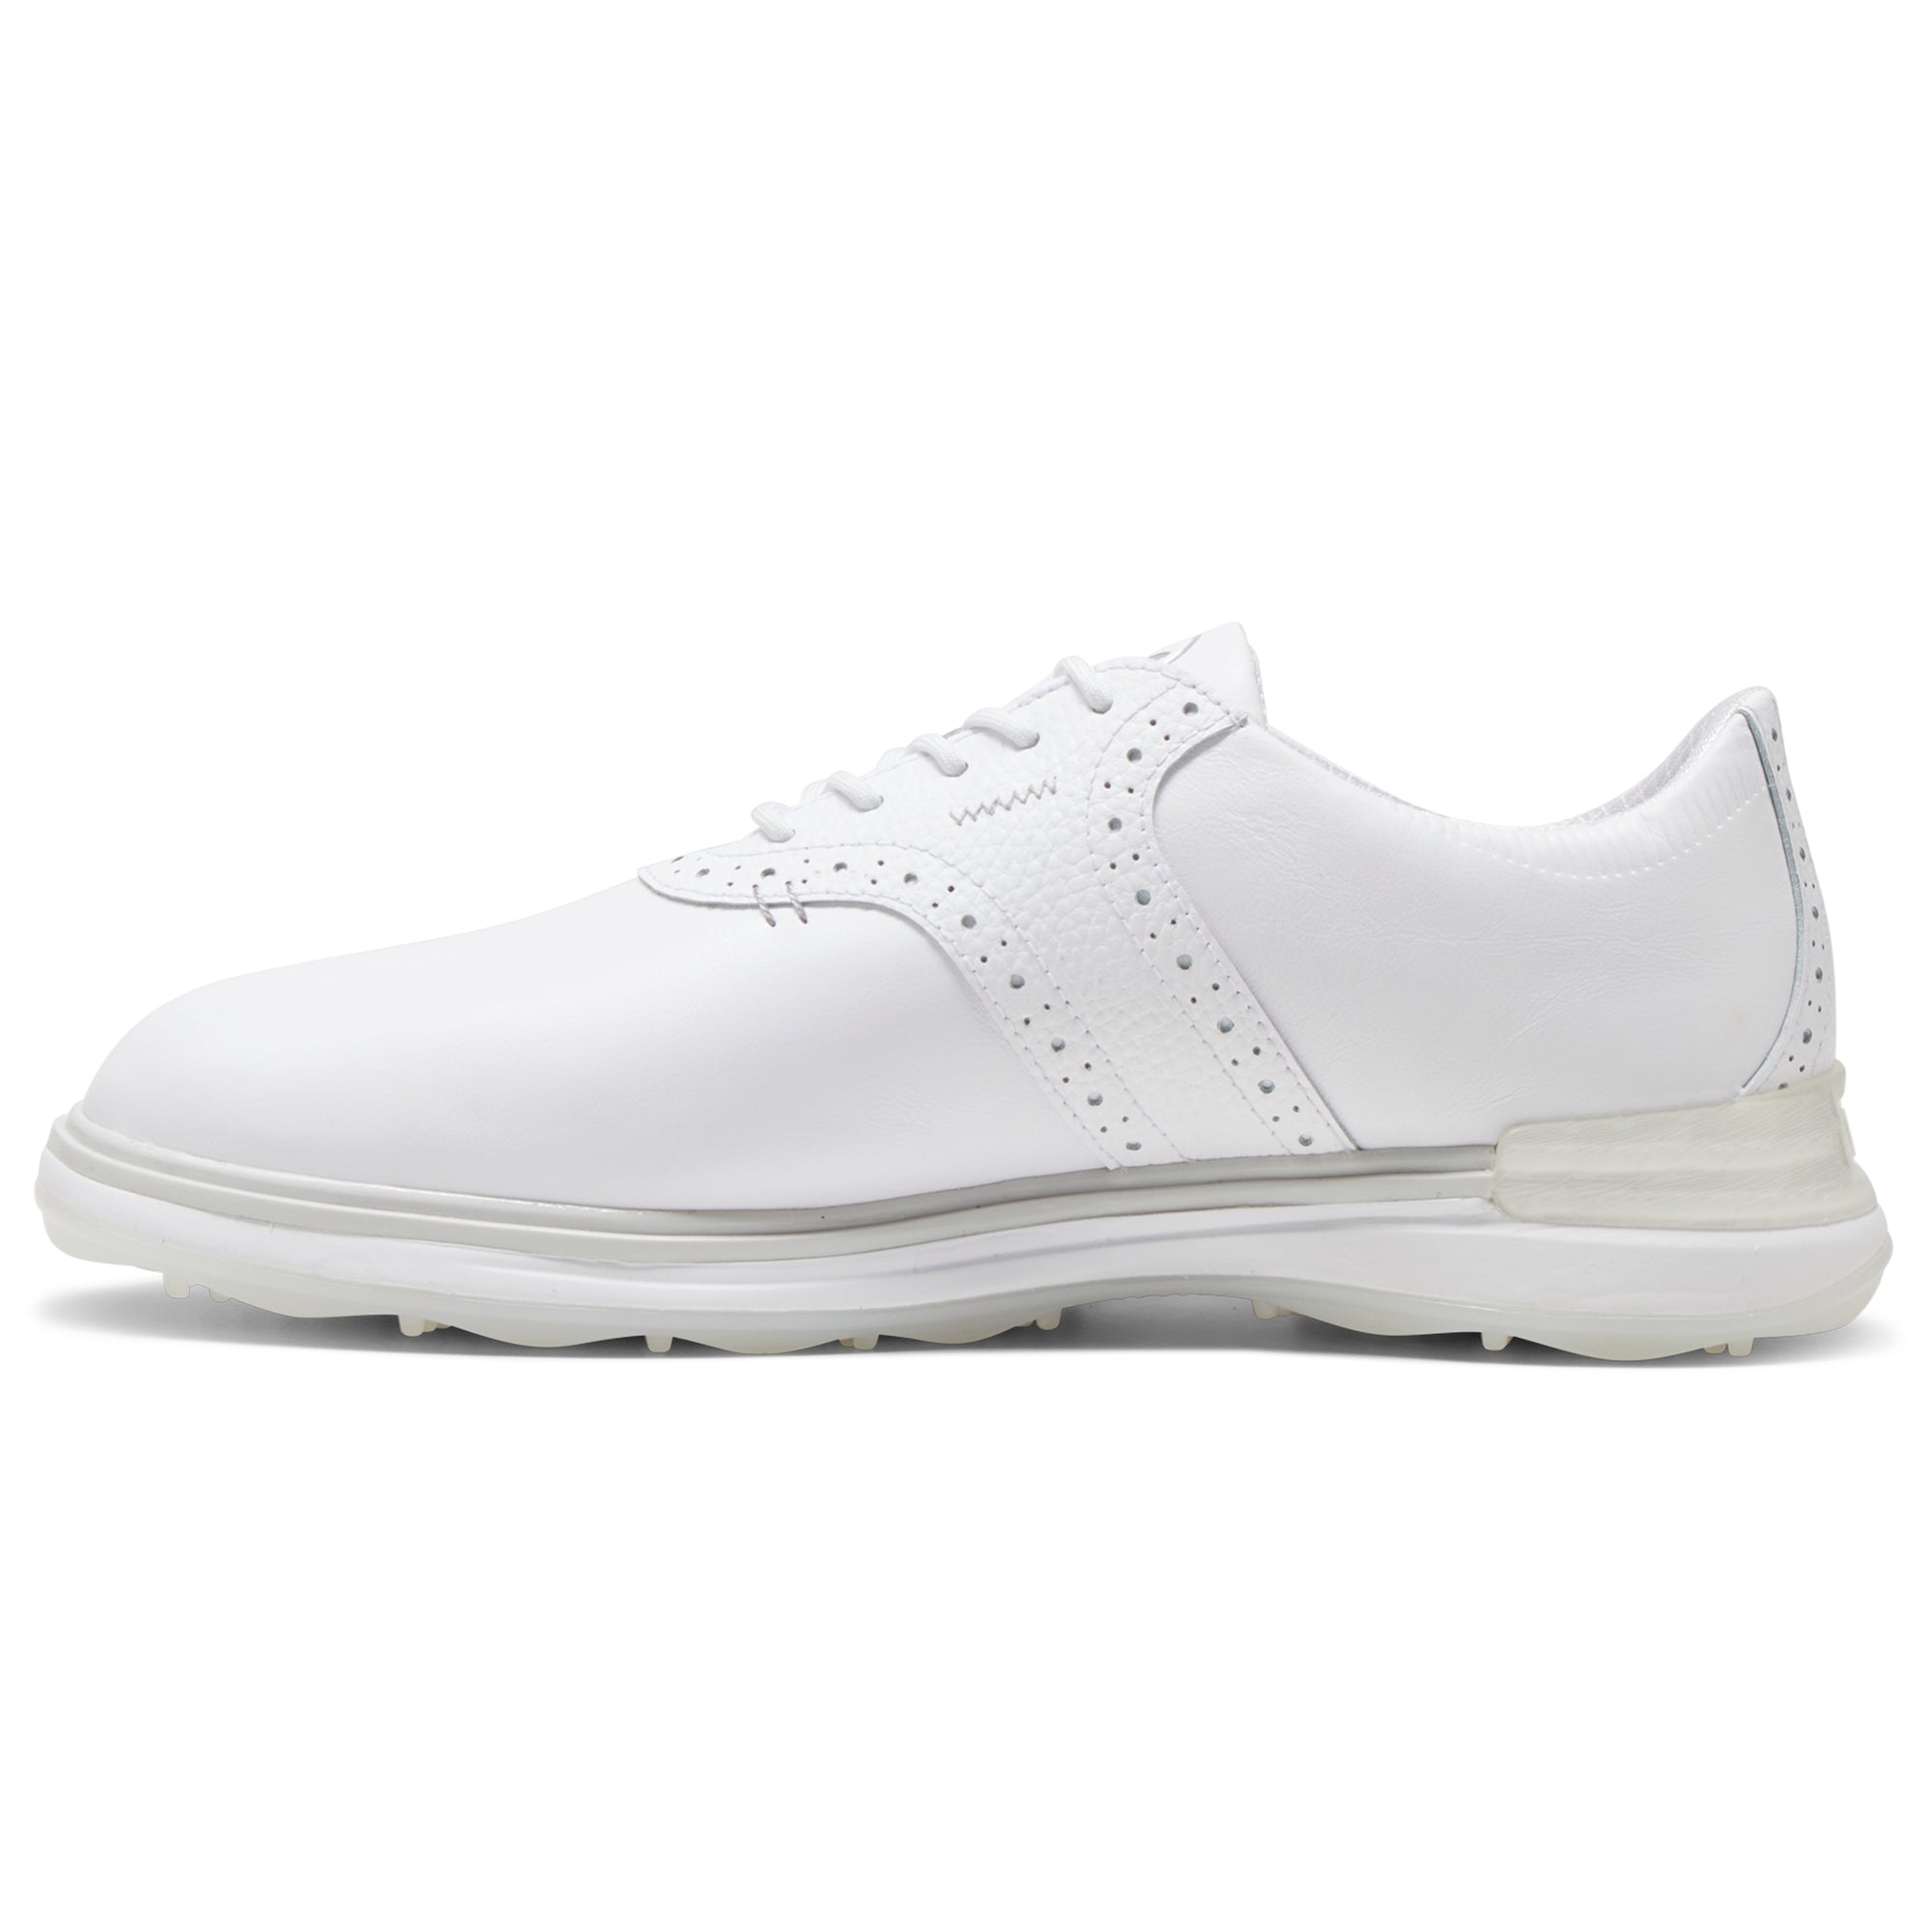 puma-avant-golf-shoes-379428-puma-white-ash-grey-04